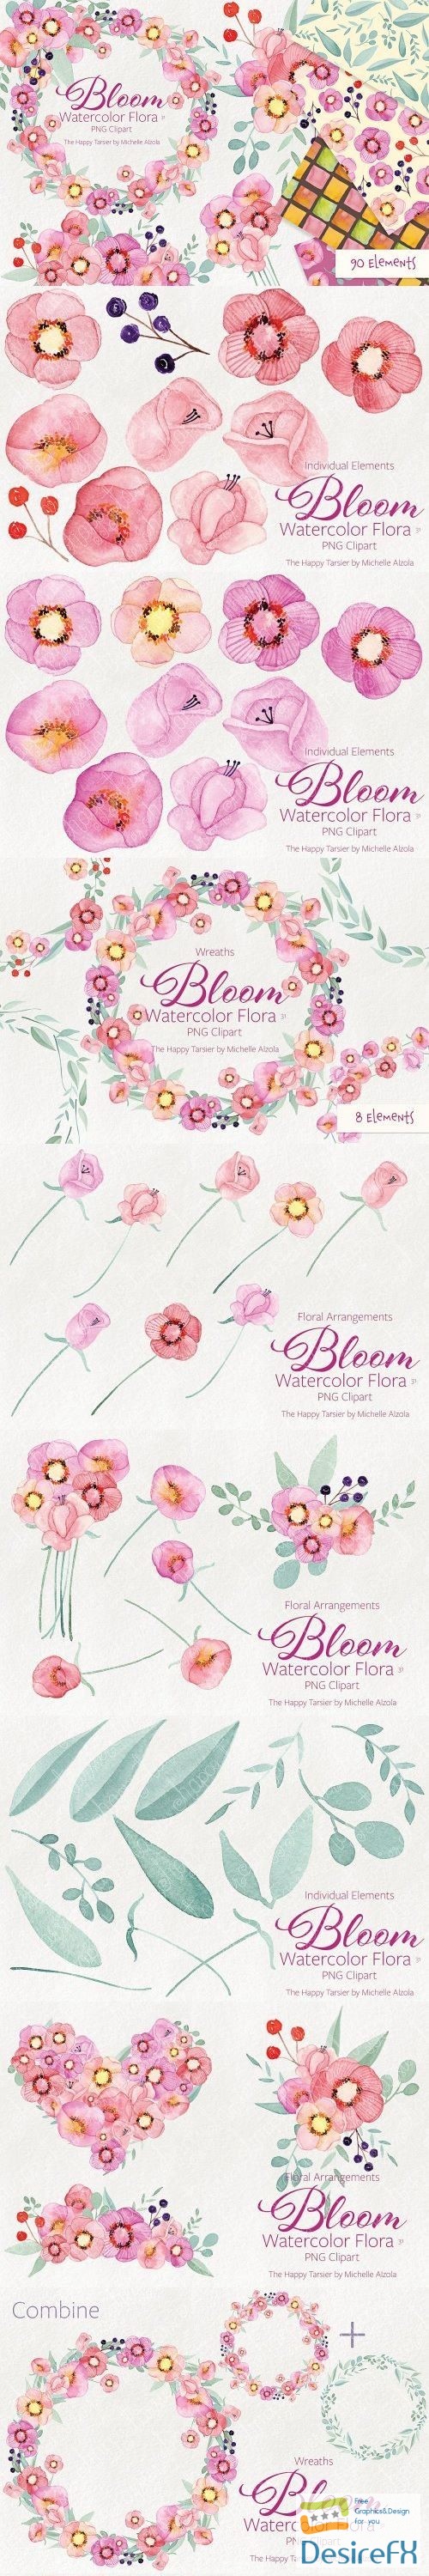 Bloom Watercolor Flora #31 - 2311881